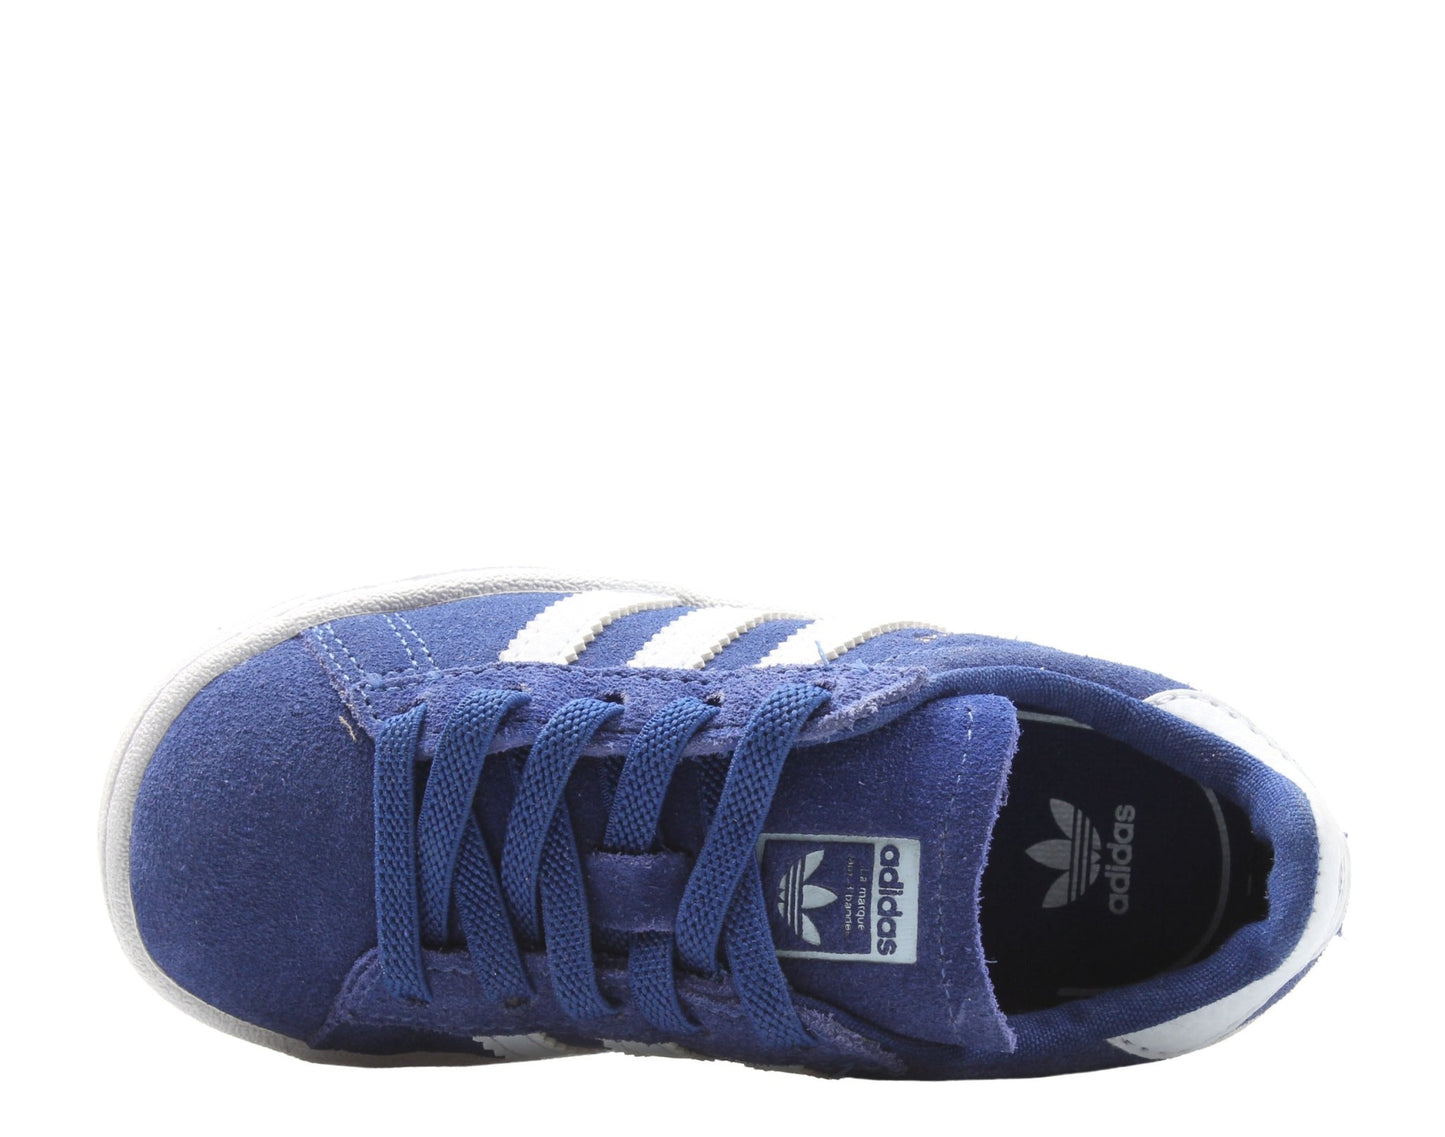 Adidas Originals Campus EL I Infant Blue/White Little Kids Casual Shoes B41961 - Becauze